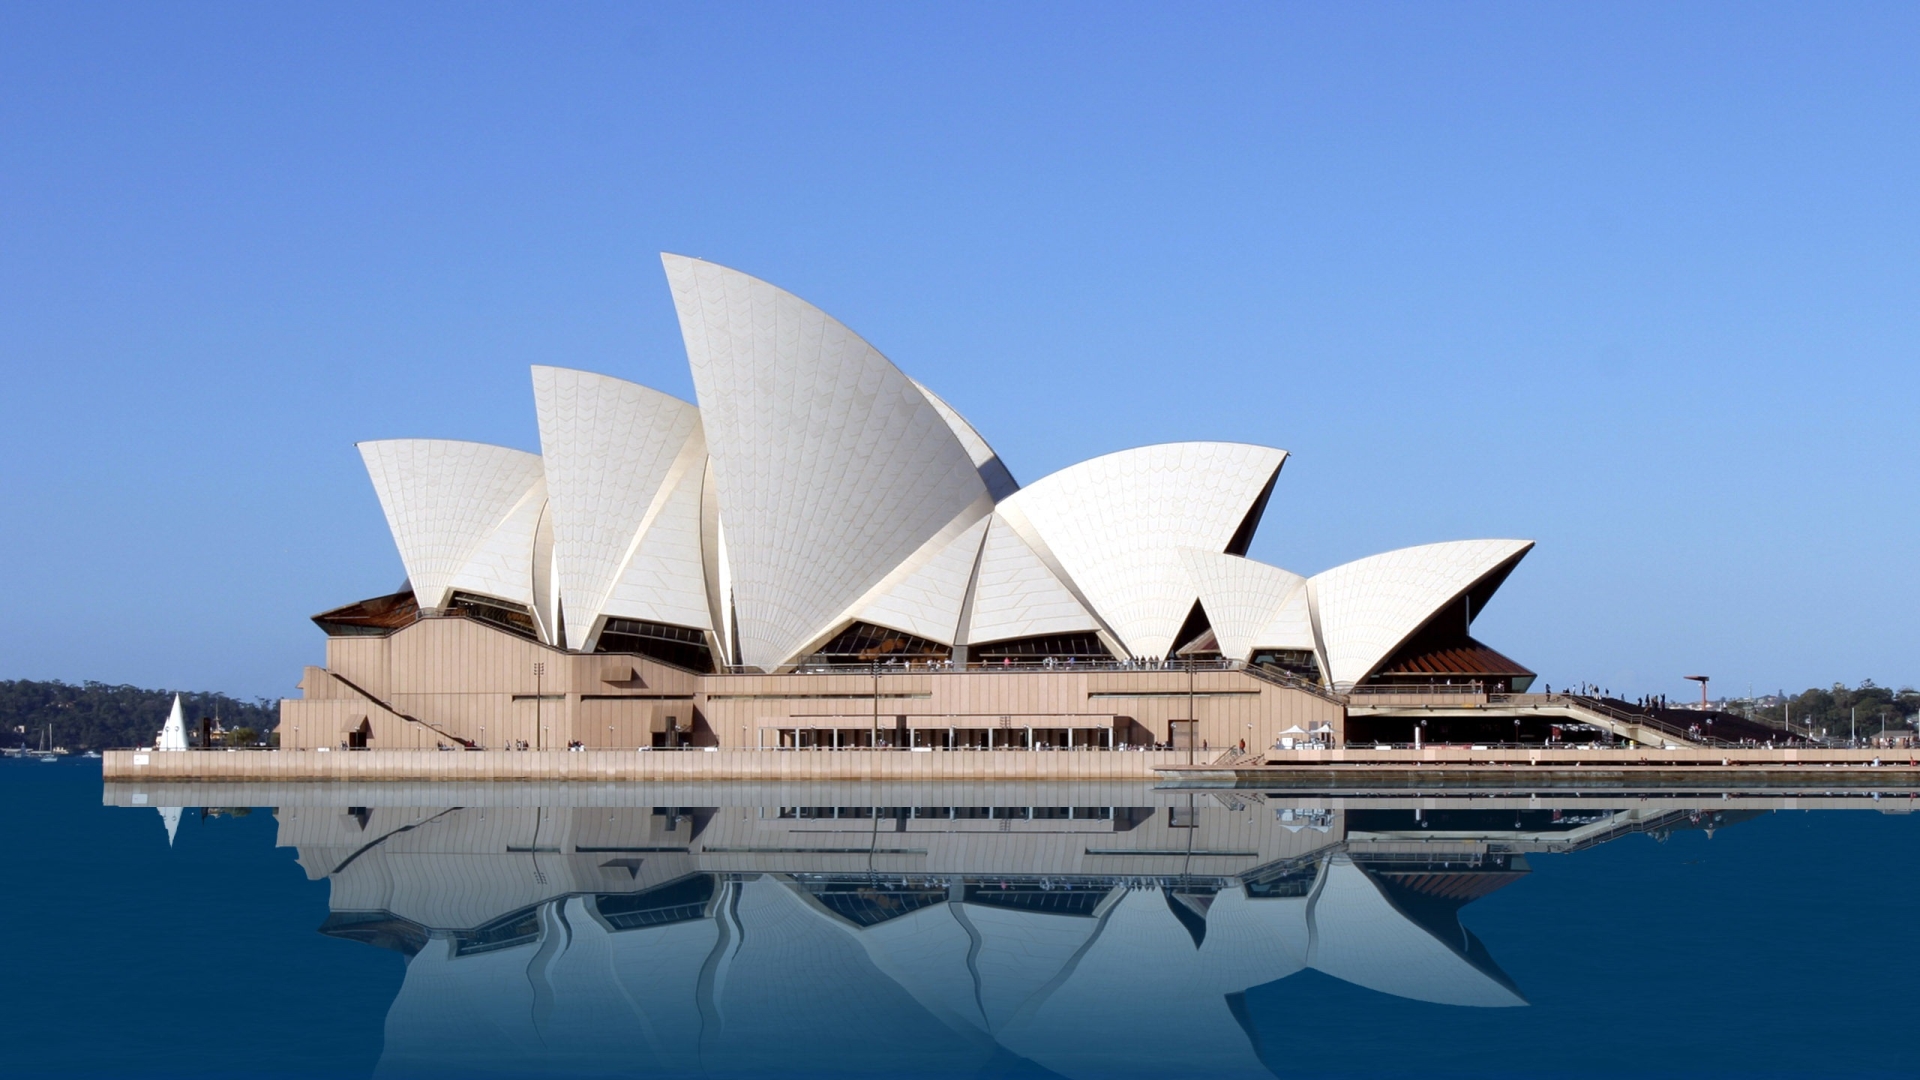 Sydney Opera House - Stunning architectural masterpiece in Sydney, Australia.